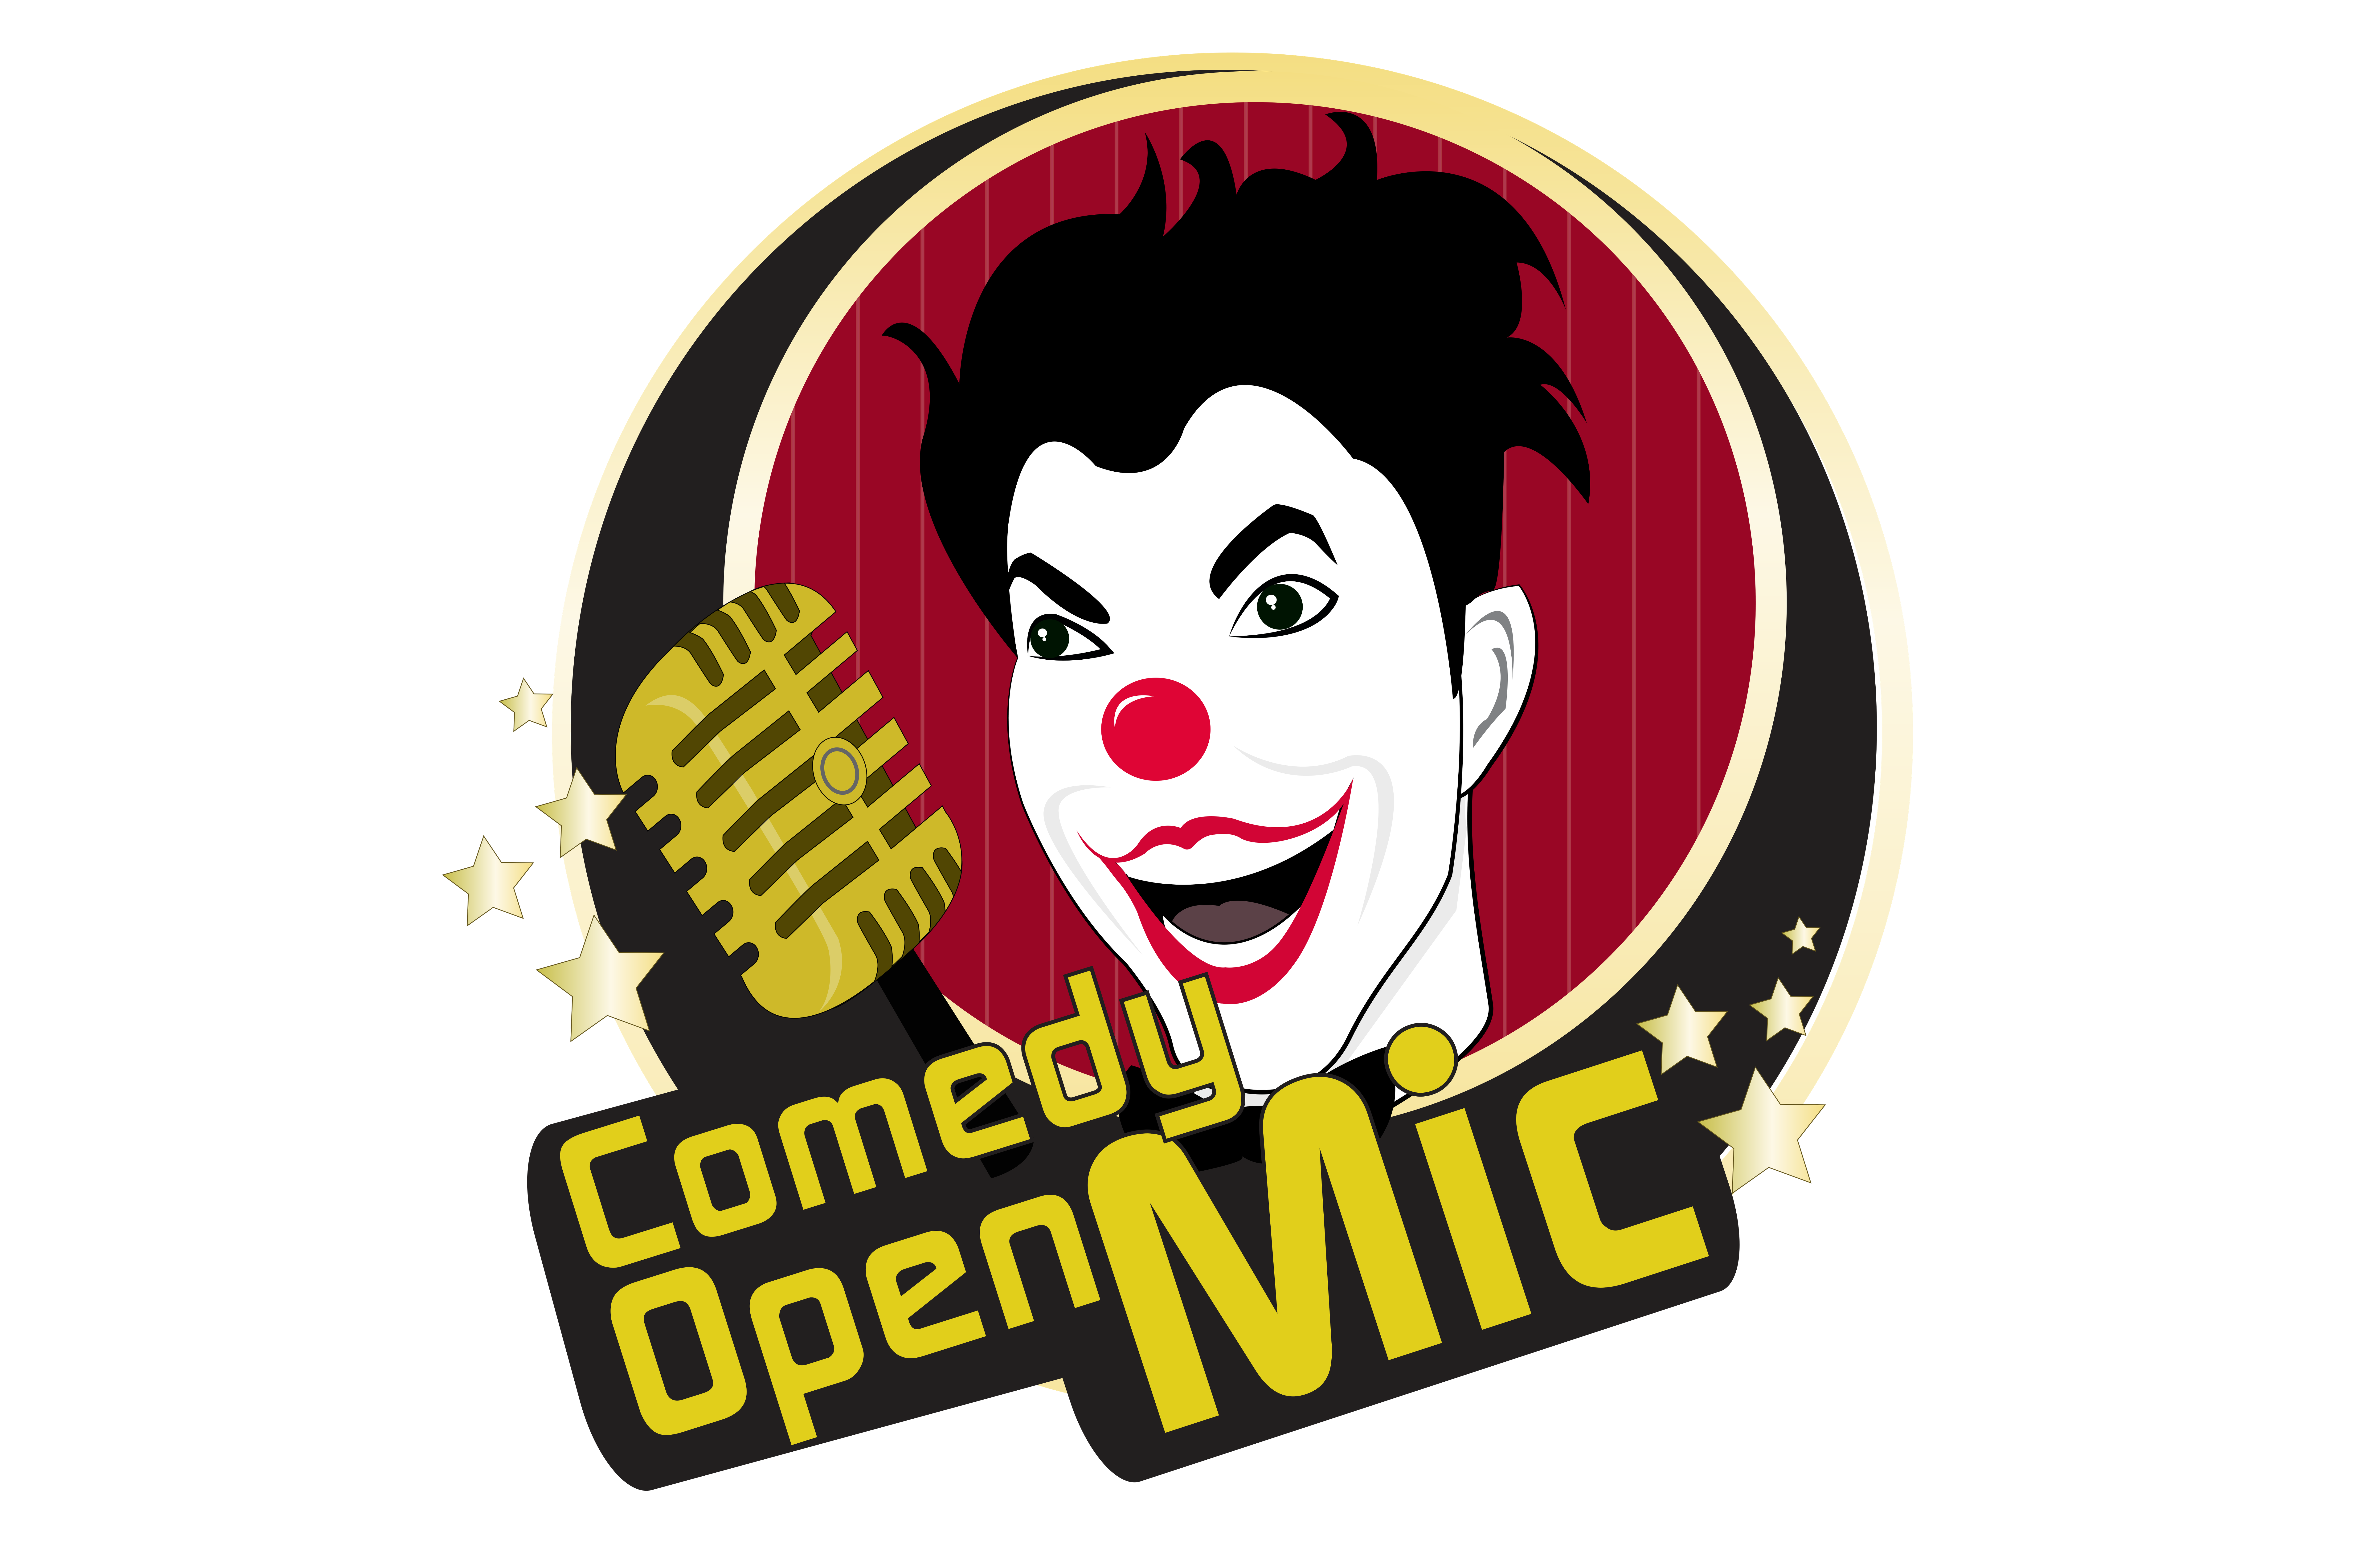 Comedy logo Vectors & Illustrations for Free Download | Freepik